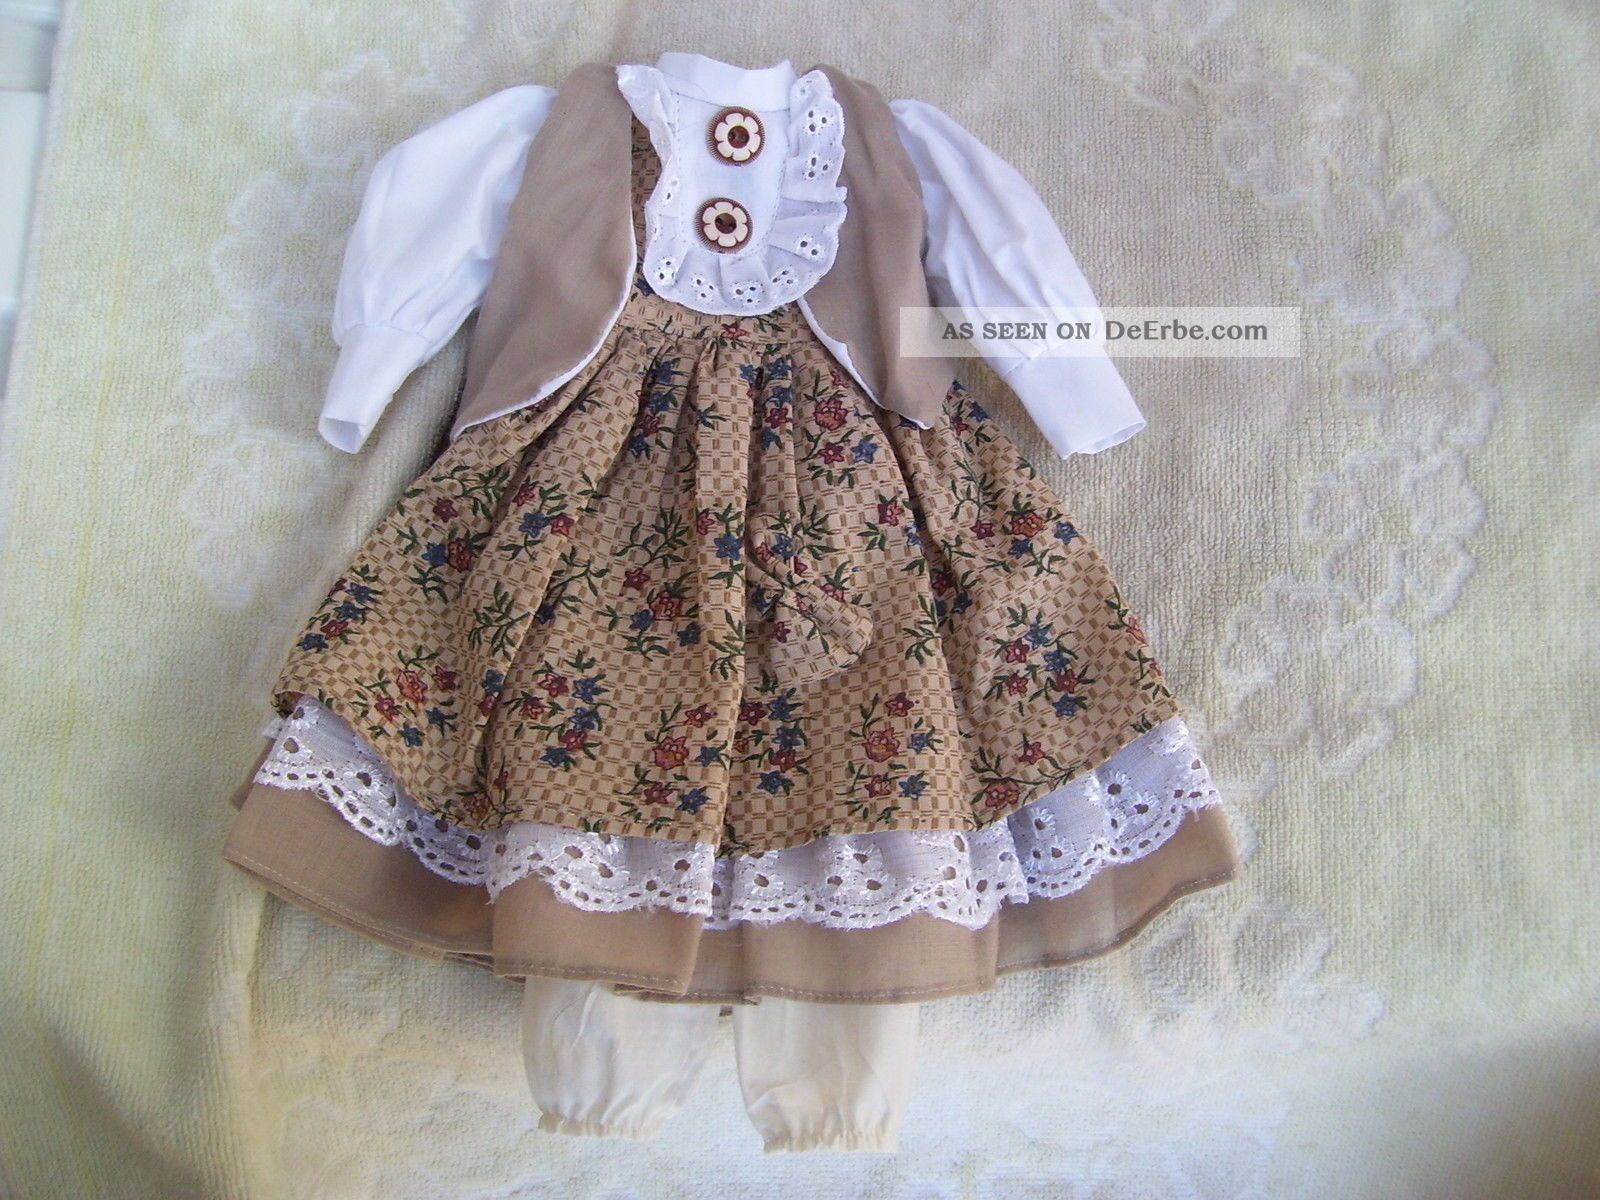 Alte Puppenkleidung Flowery Dress Vest Outfit Vintage Doll Clothes 35 Cm Girl Original, gefertigt vor 1970 Bild